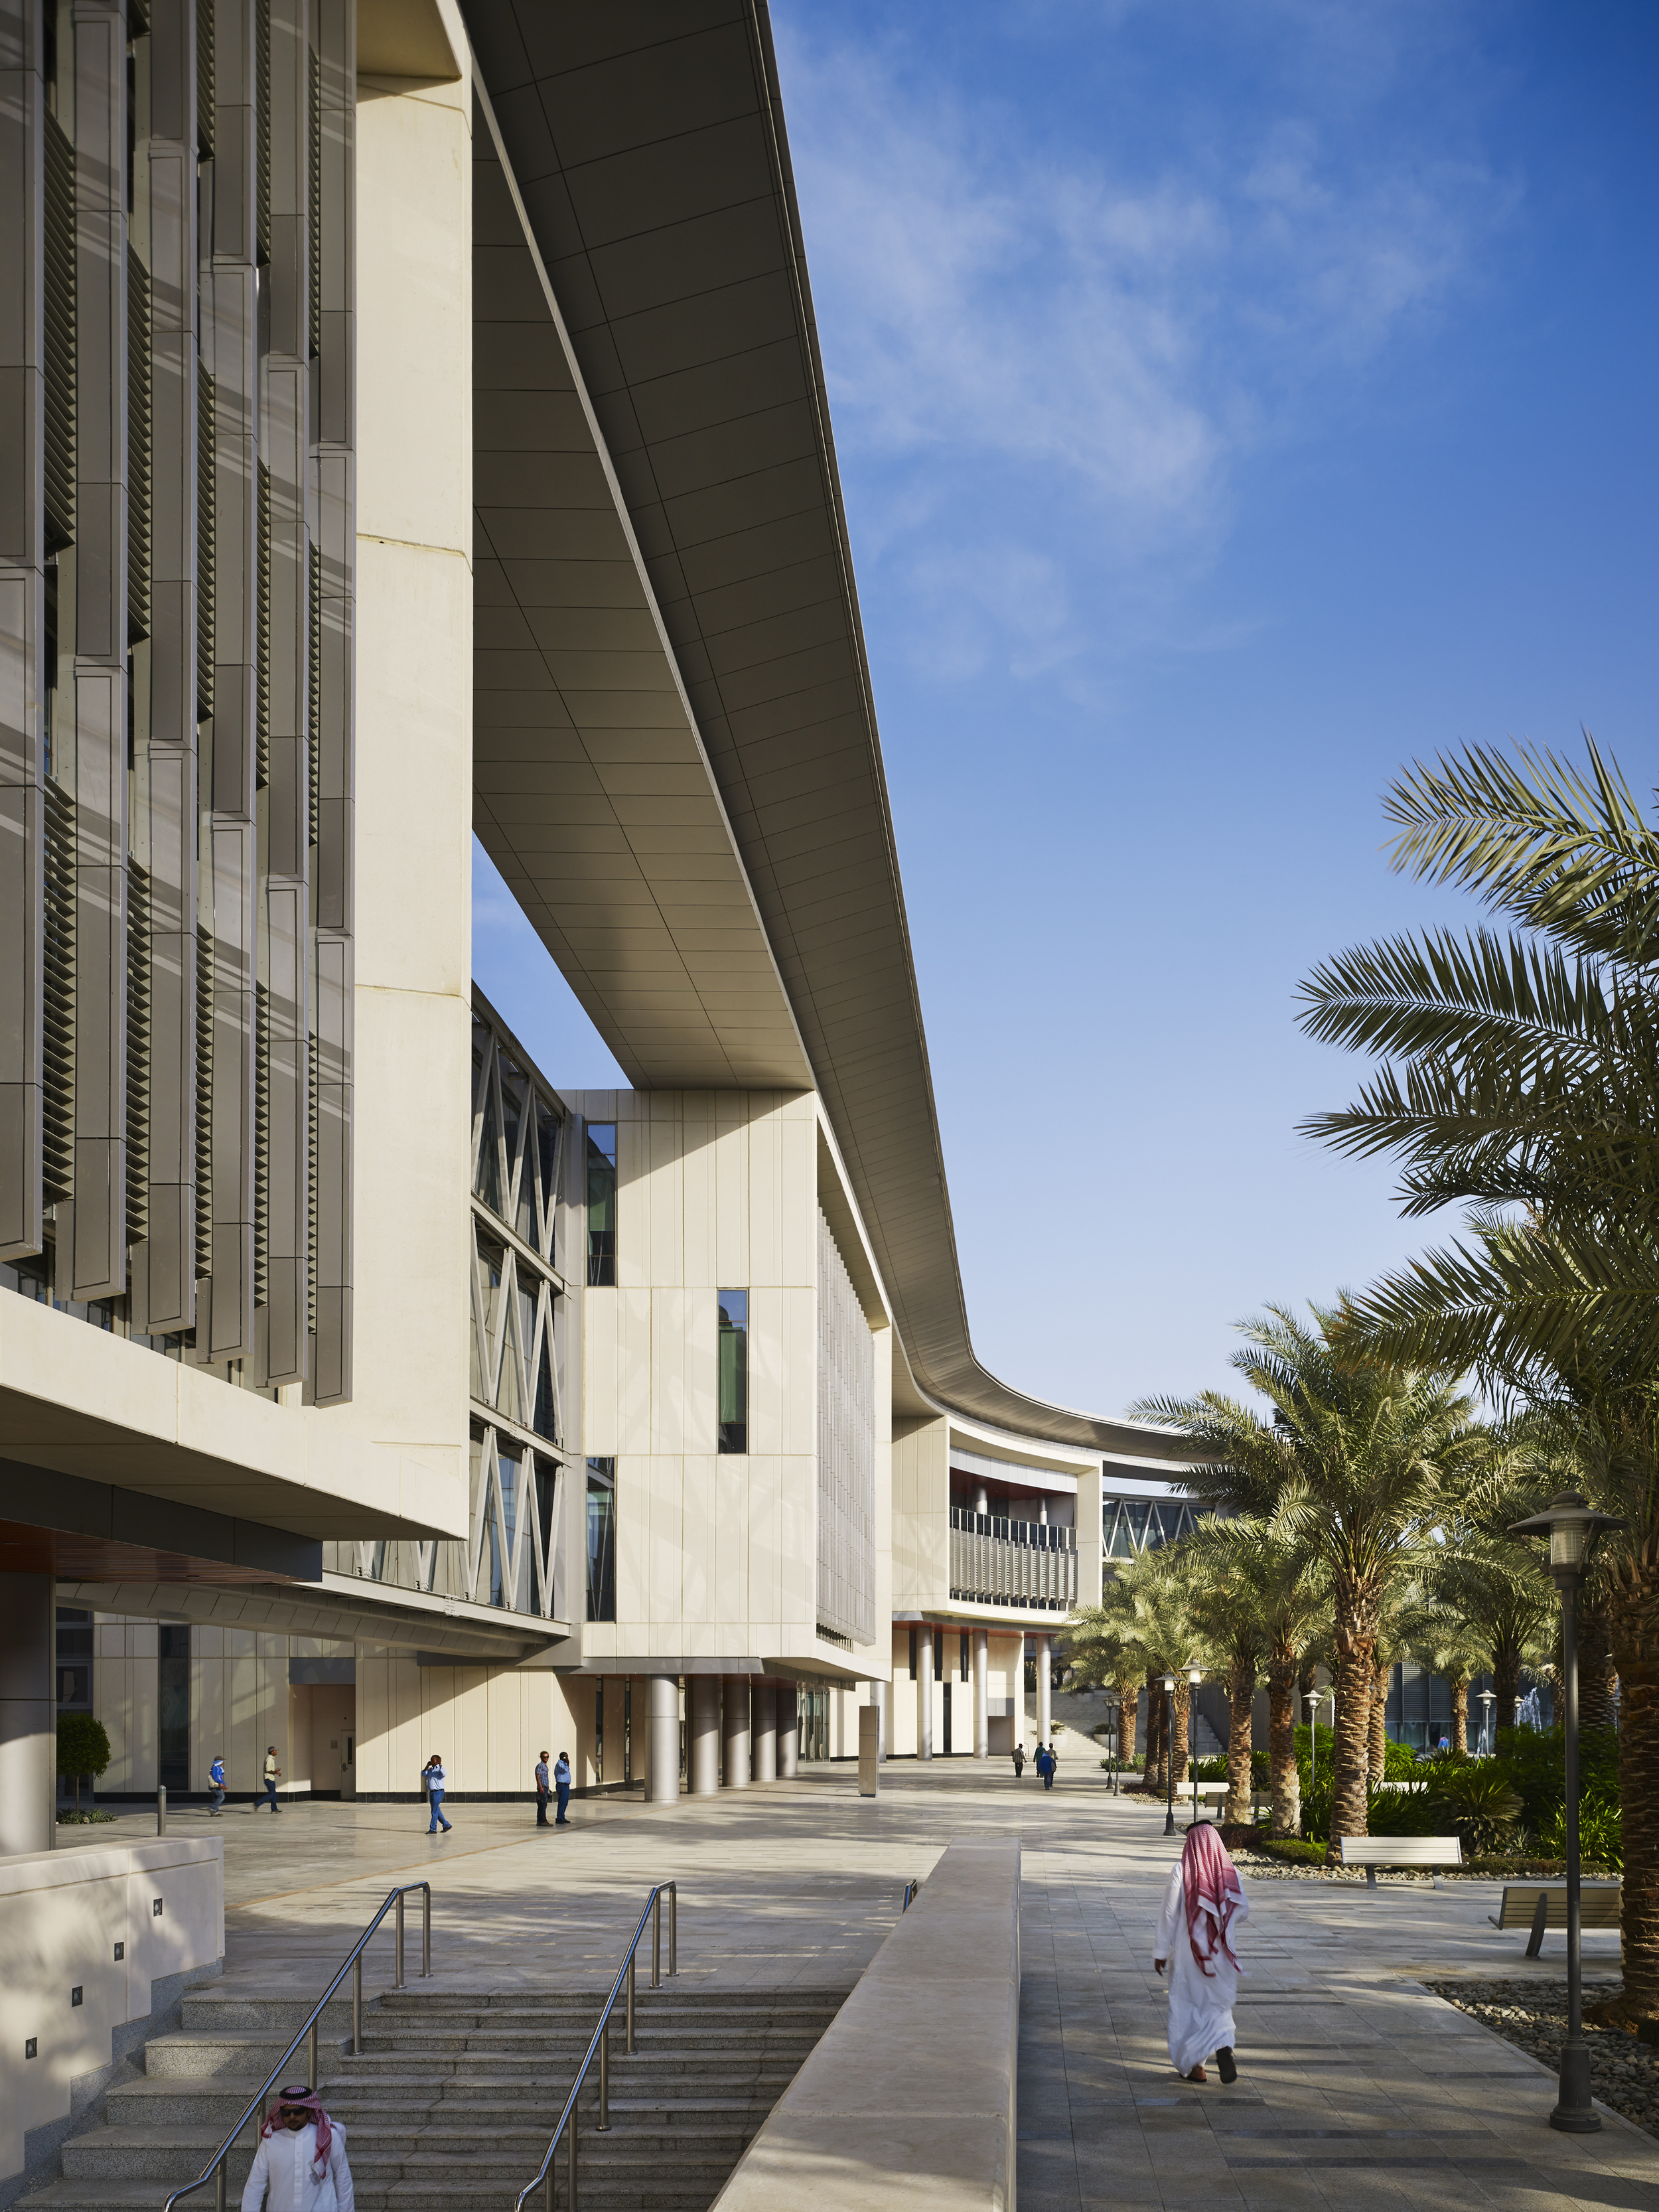  KSAU Jeddah Campus  Perkins &amp; Will | Dar Al Handasah (Shair and Partners)  Jeddah, Saudi Arabia  &nbsp;   Return to Projects  